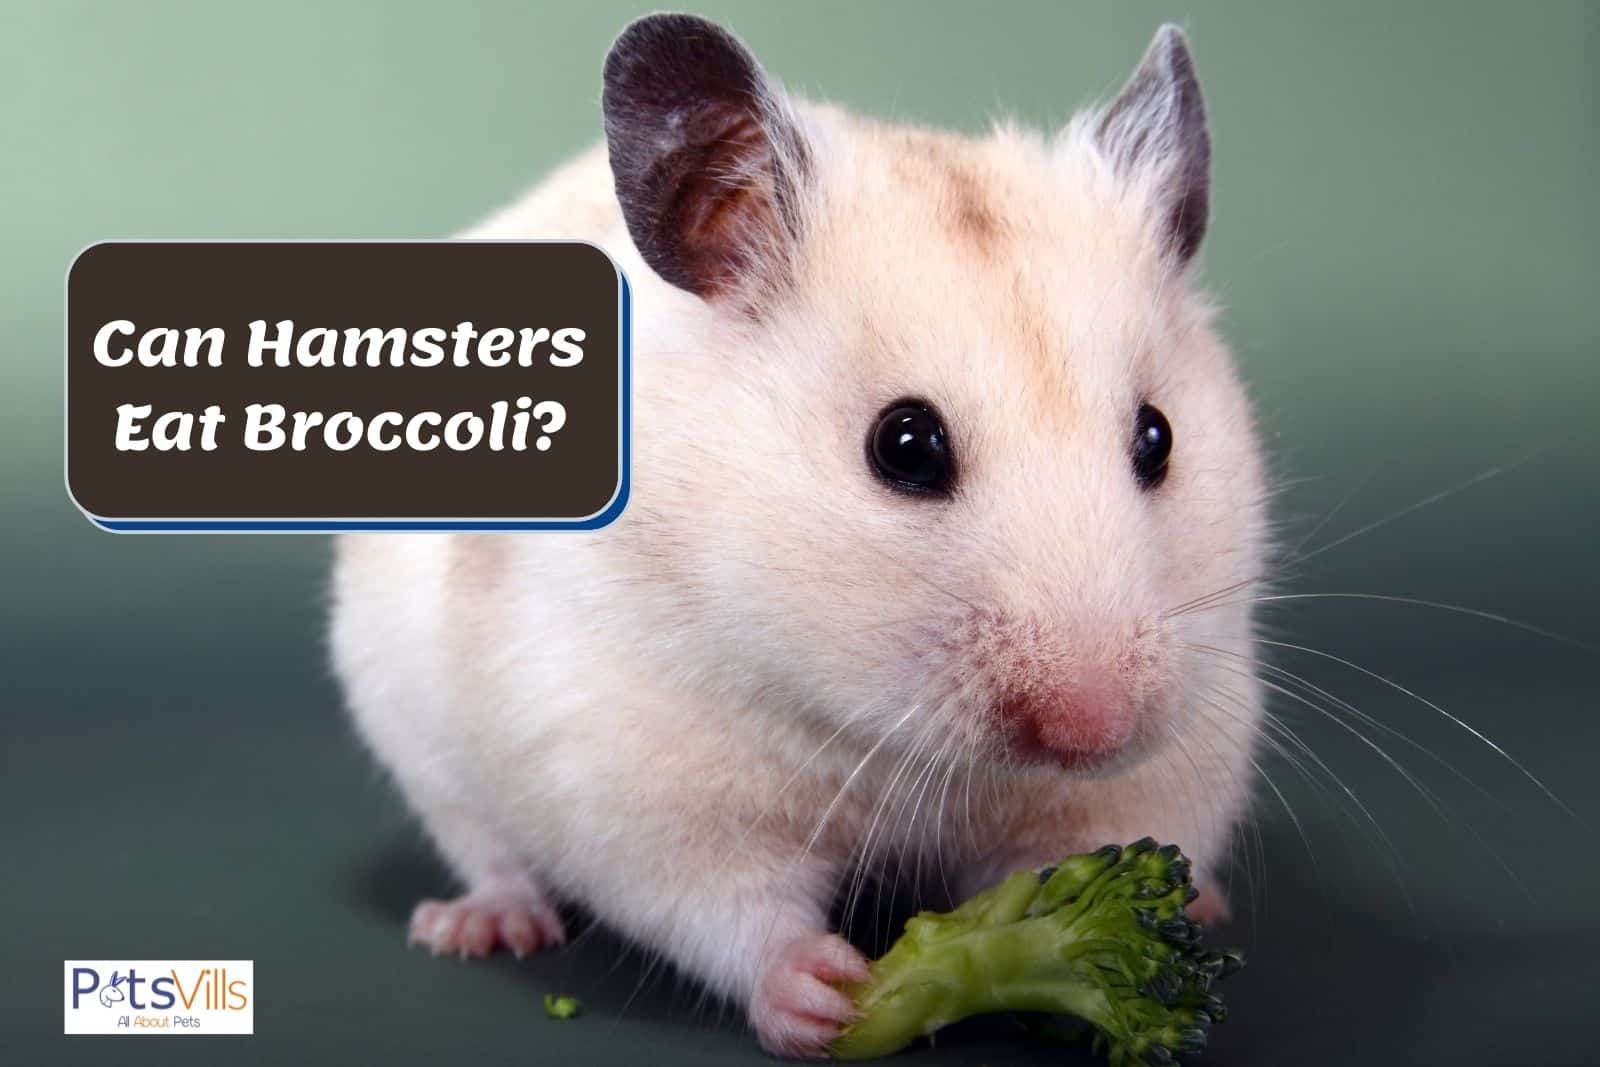 a hamster eating broccoli, can hamsters eat broccoli